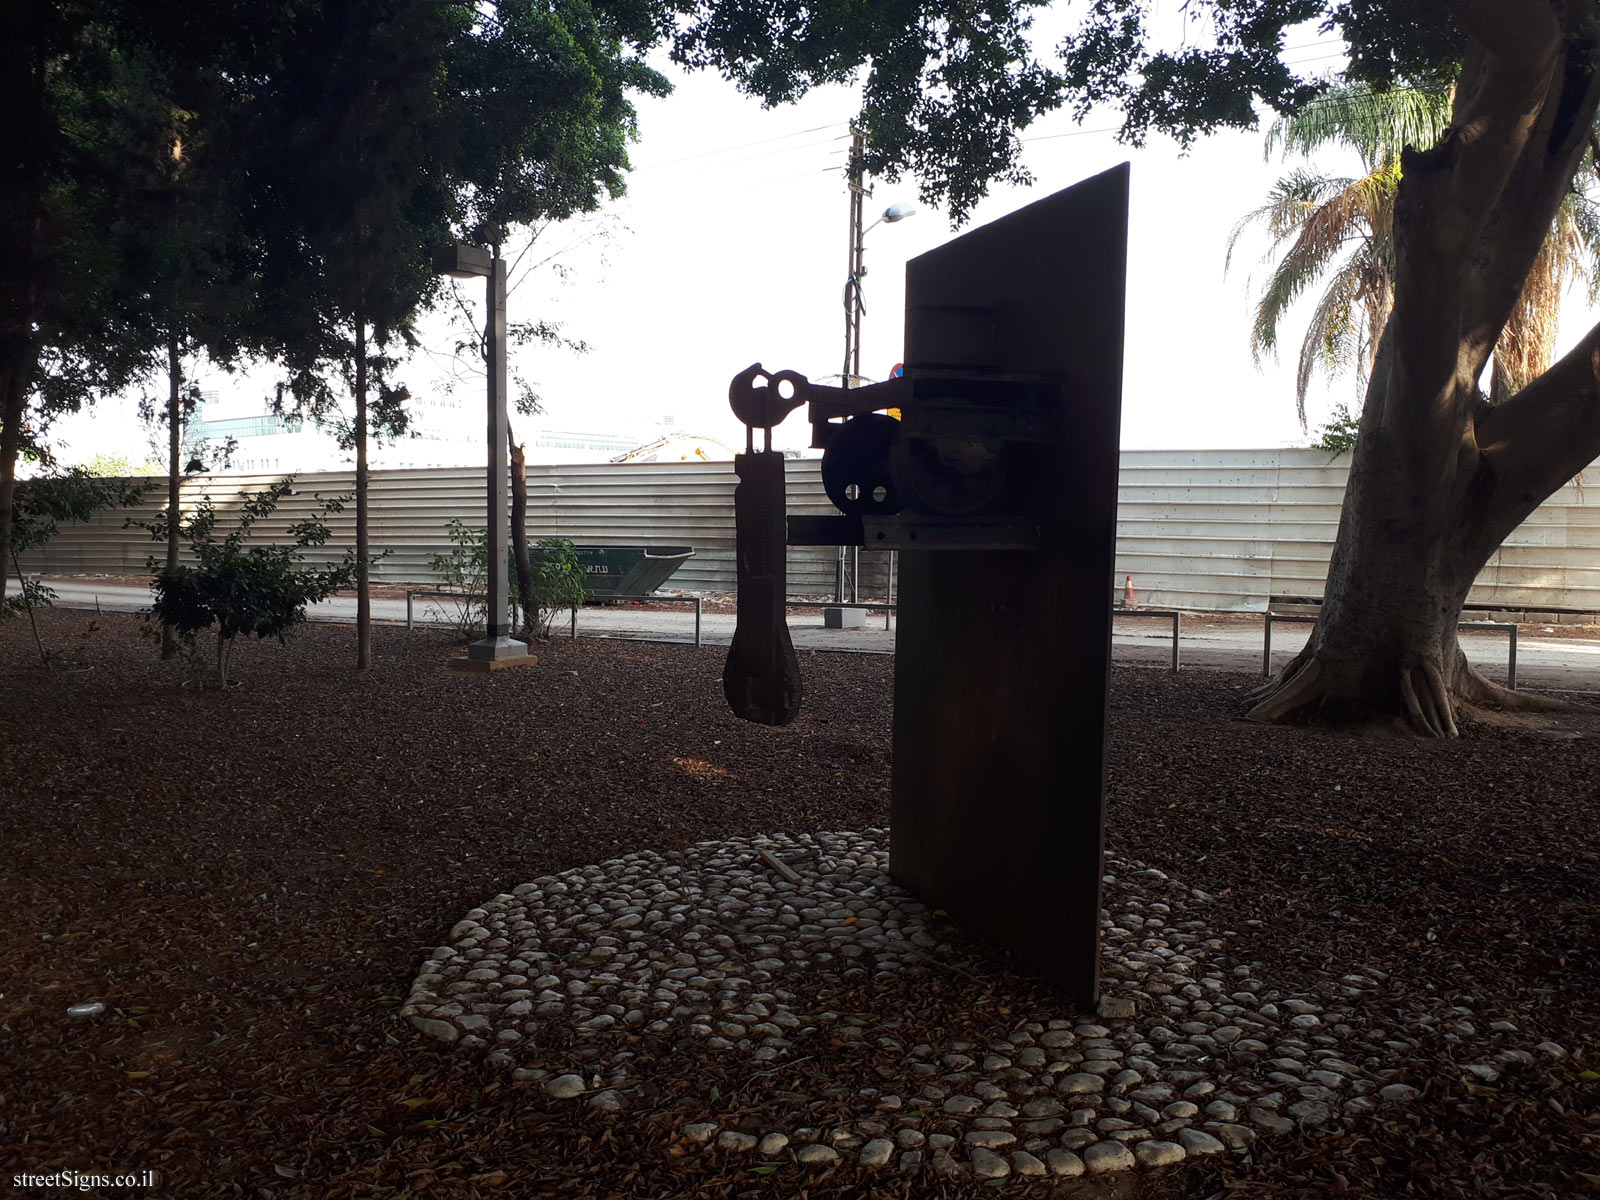 Tel Aviv - Tomarkin sculptures at Abu Nabot Park - Memory of the Future (for Walter Benjamin)